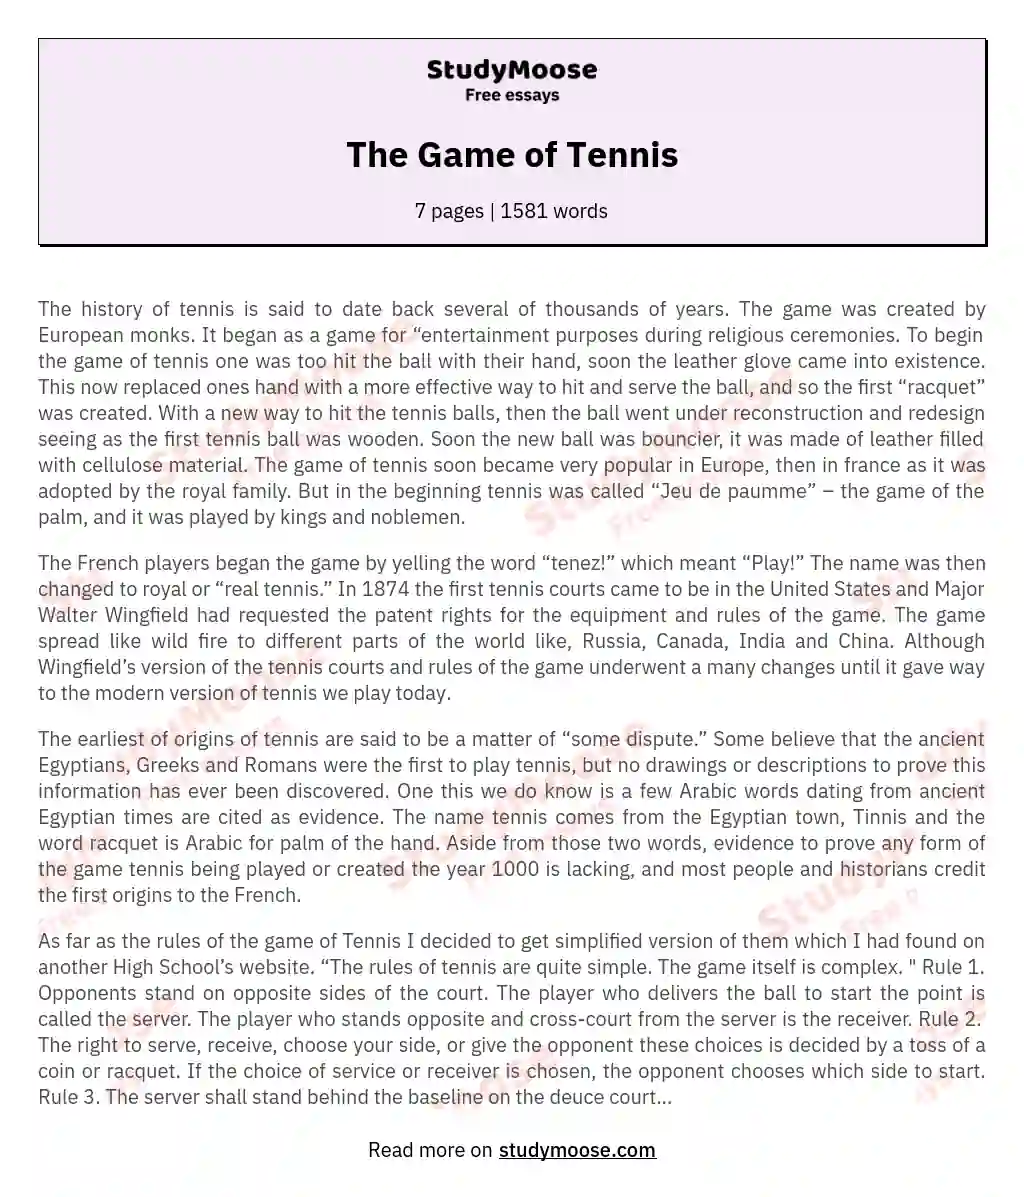 my favorite game tennis essay